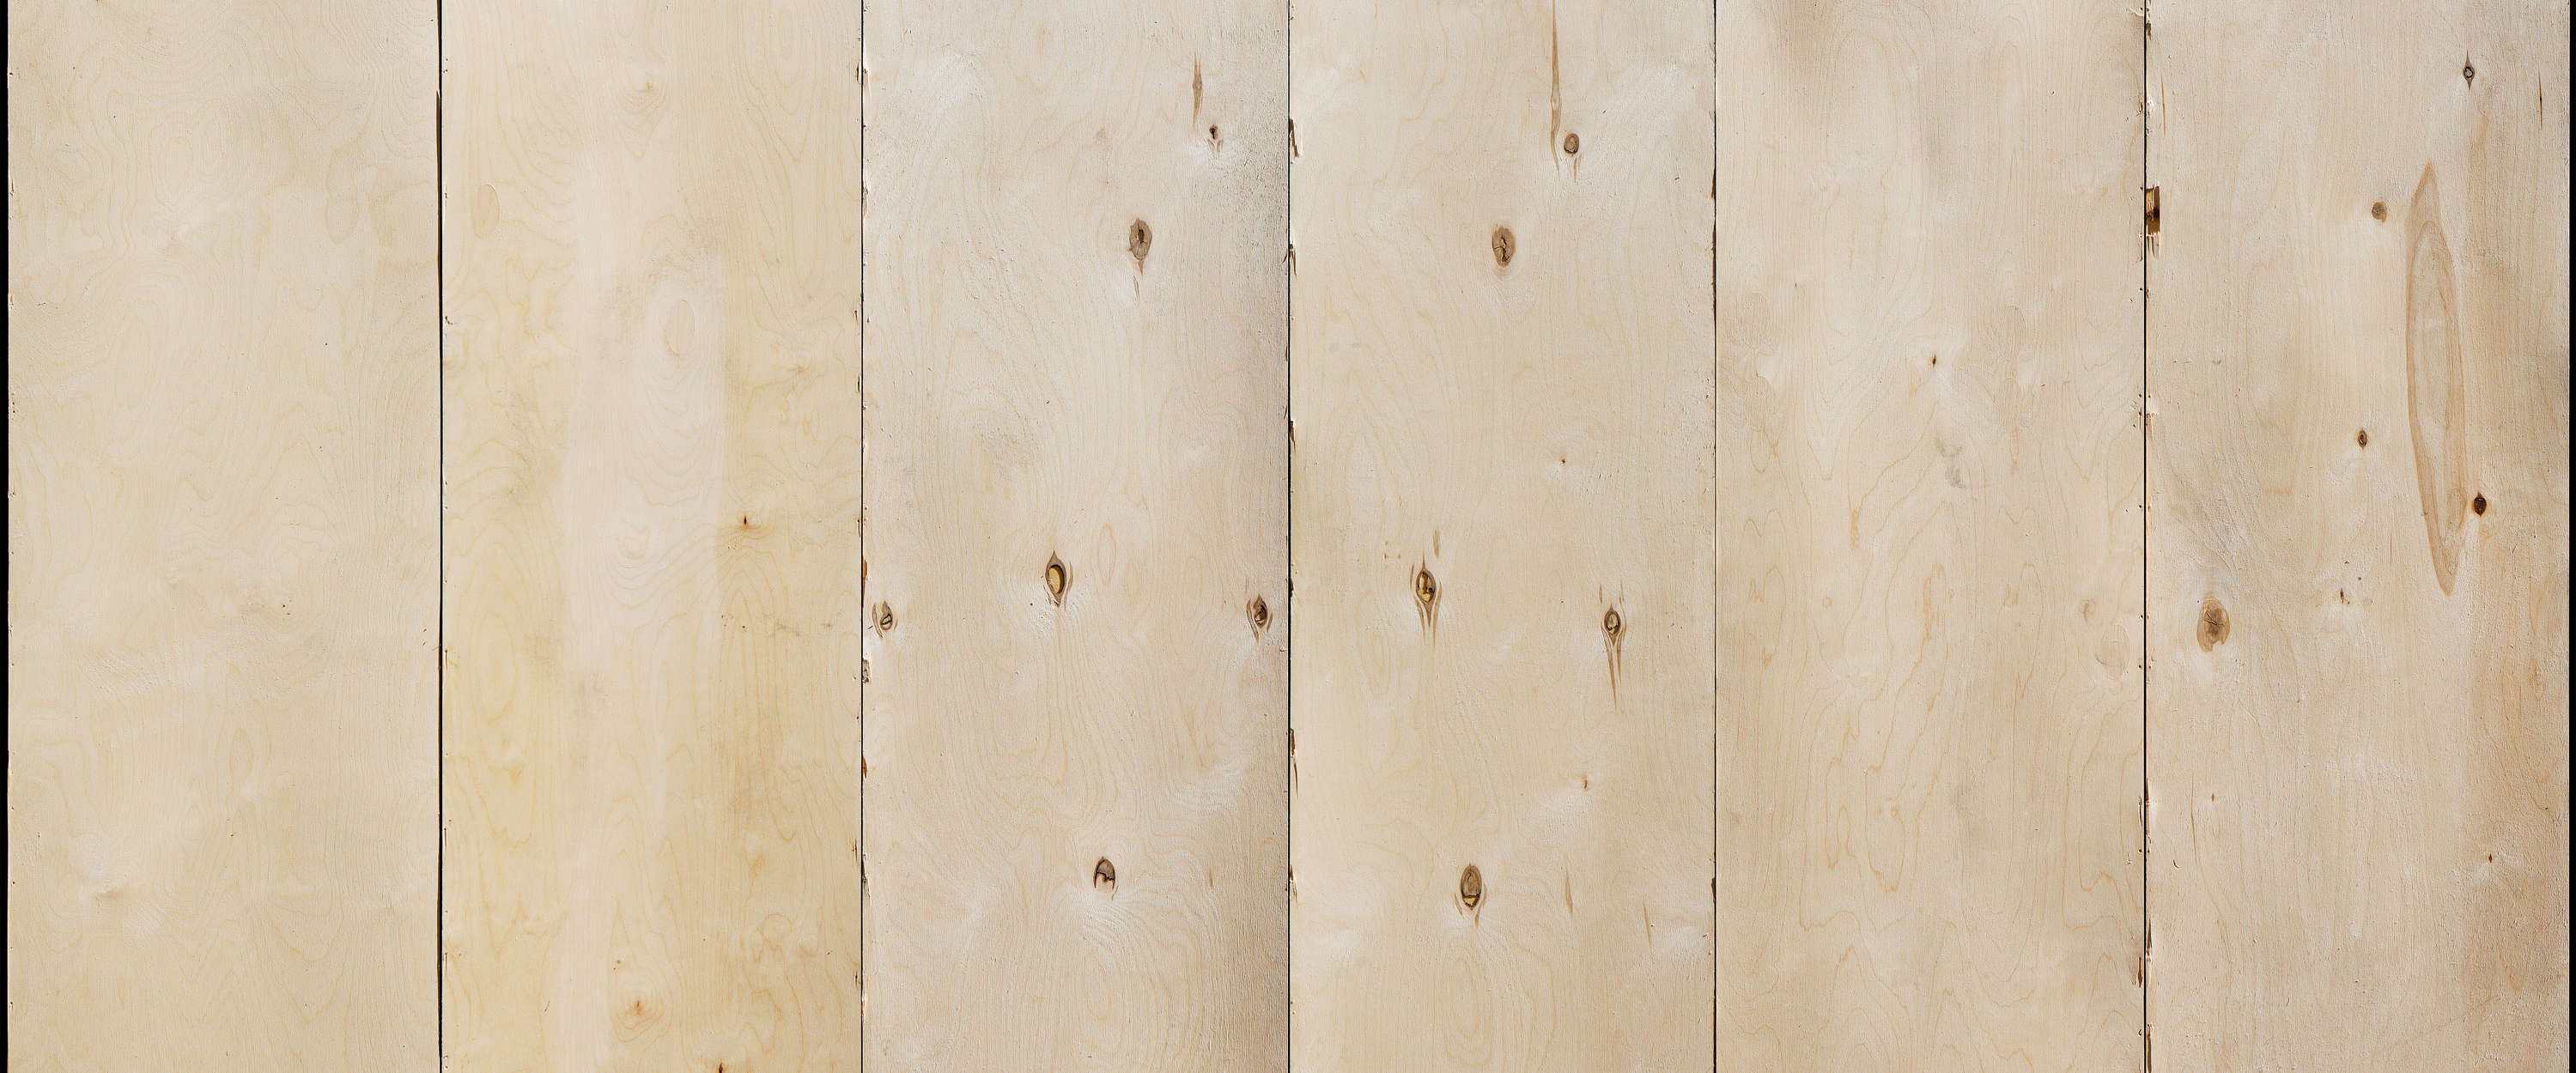             Wood optics photo wallpaper planks with grain
        